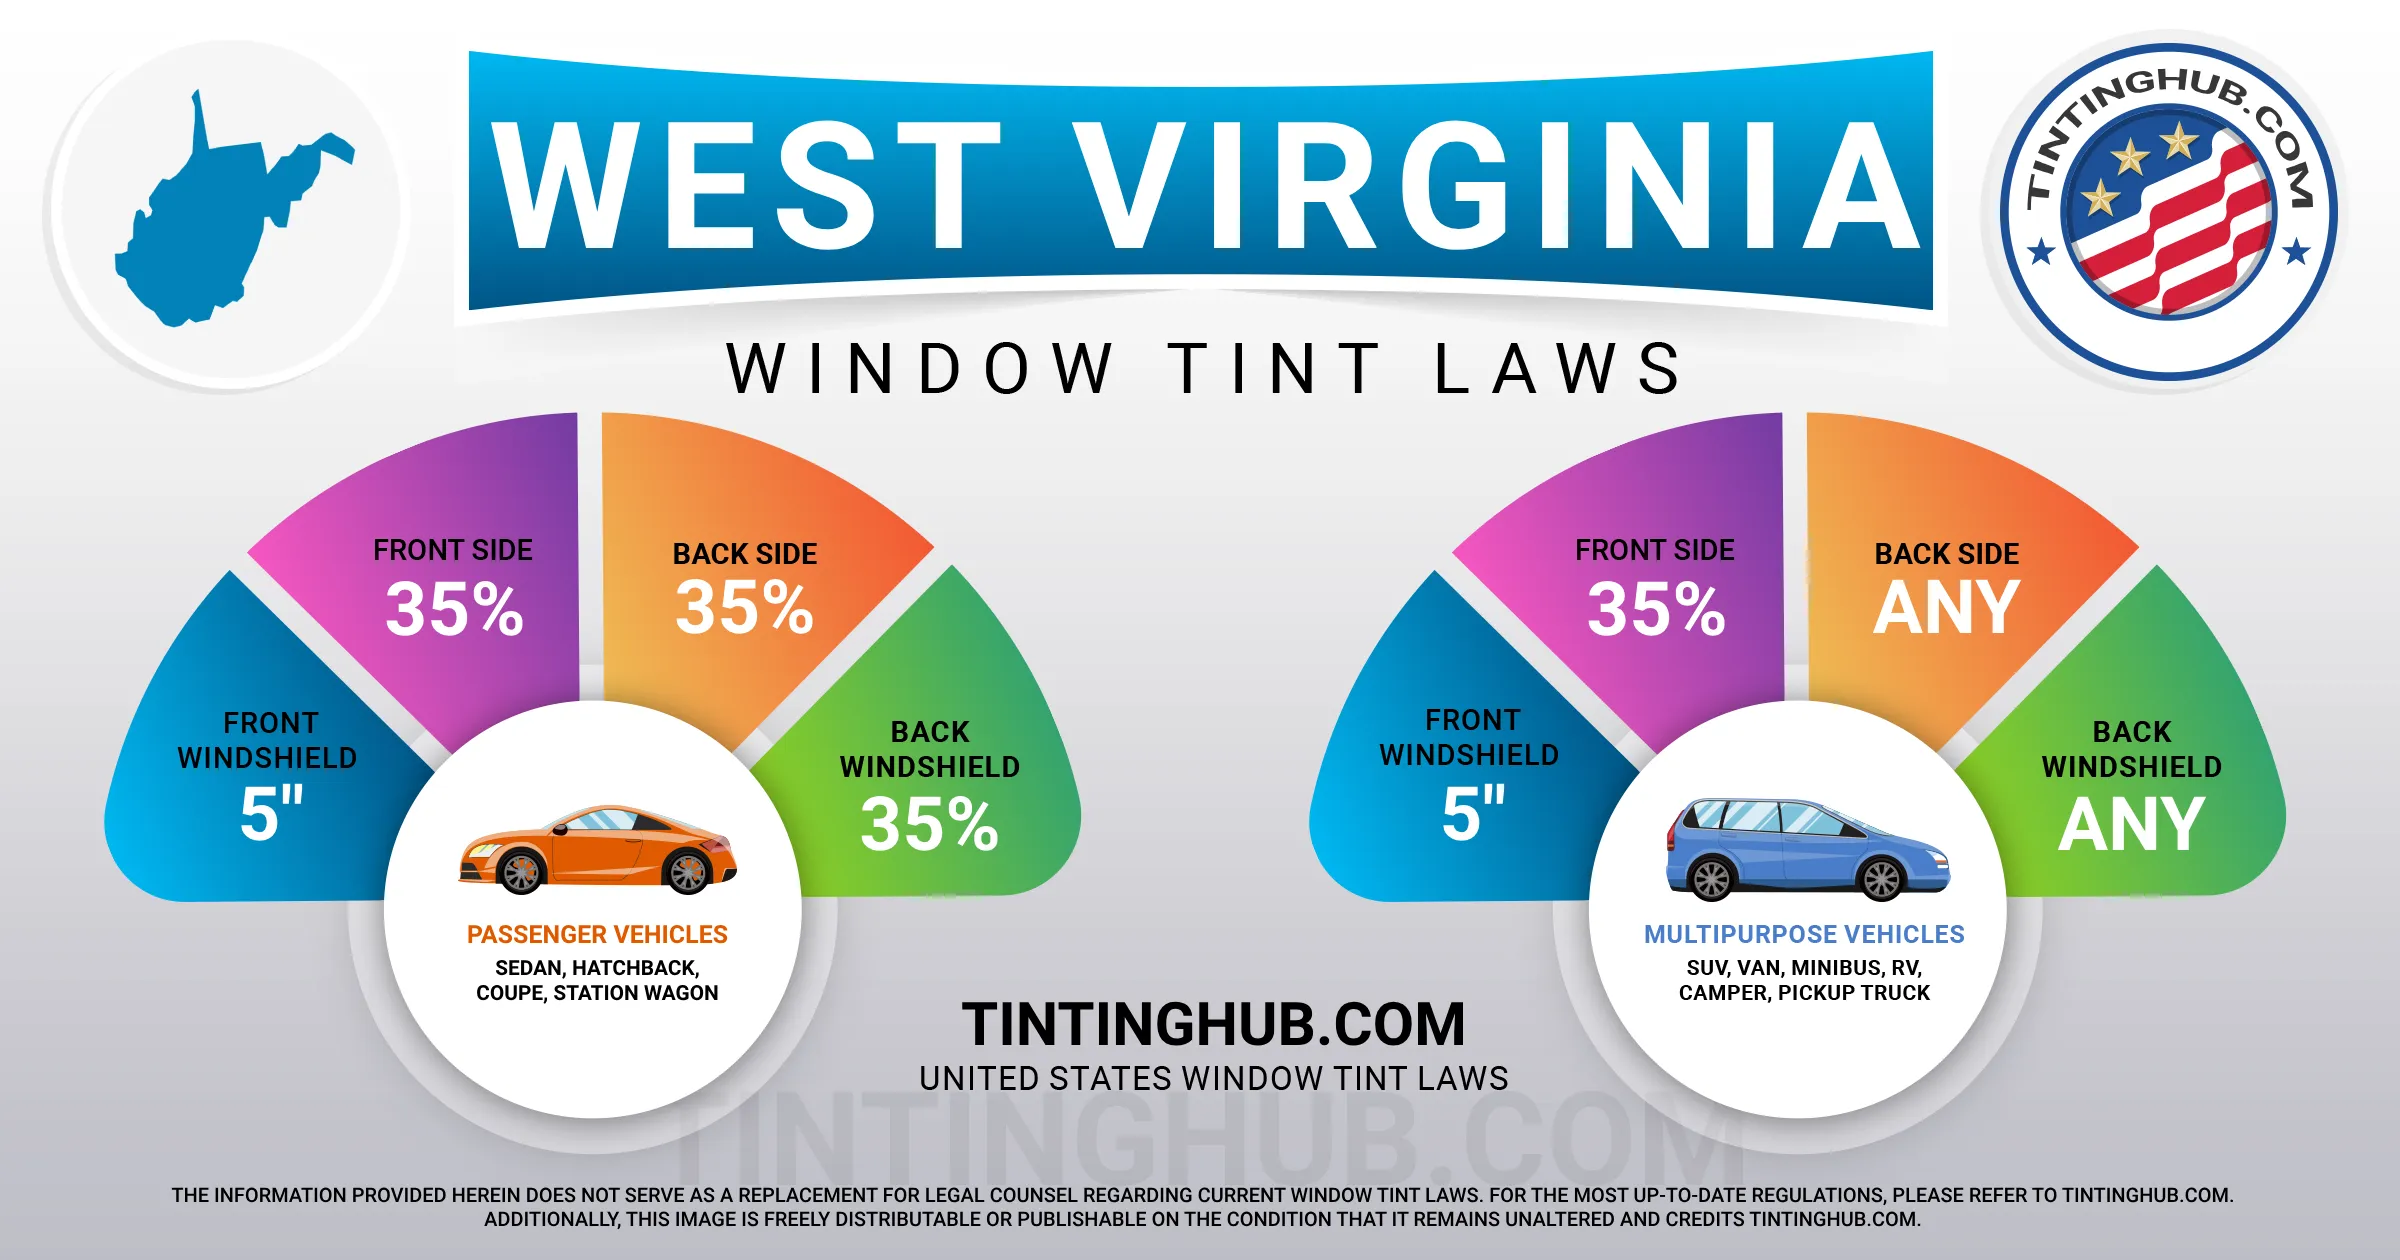 West Virginia Automobile Window Tint Laws